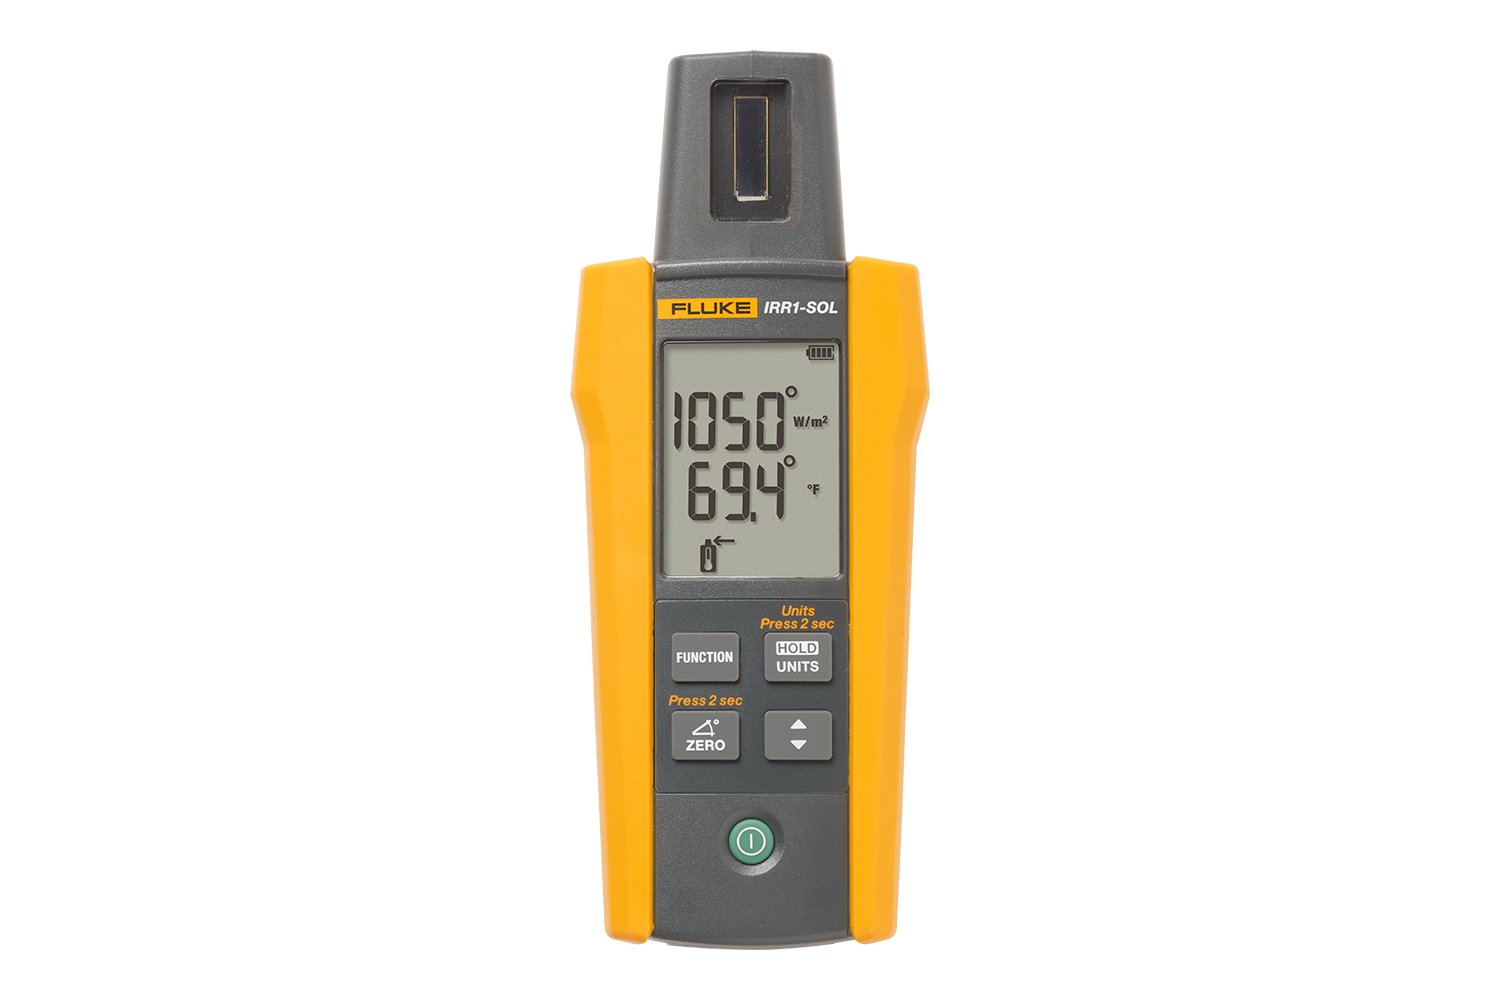 PCE Instruments Temperaturmesser PCE-889B, 131,01€